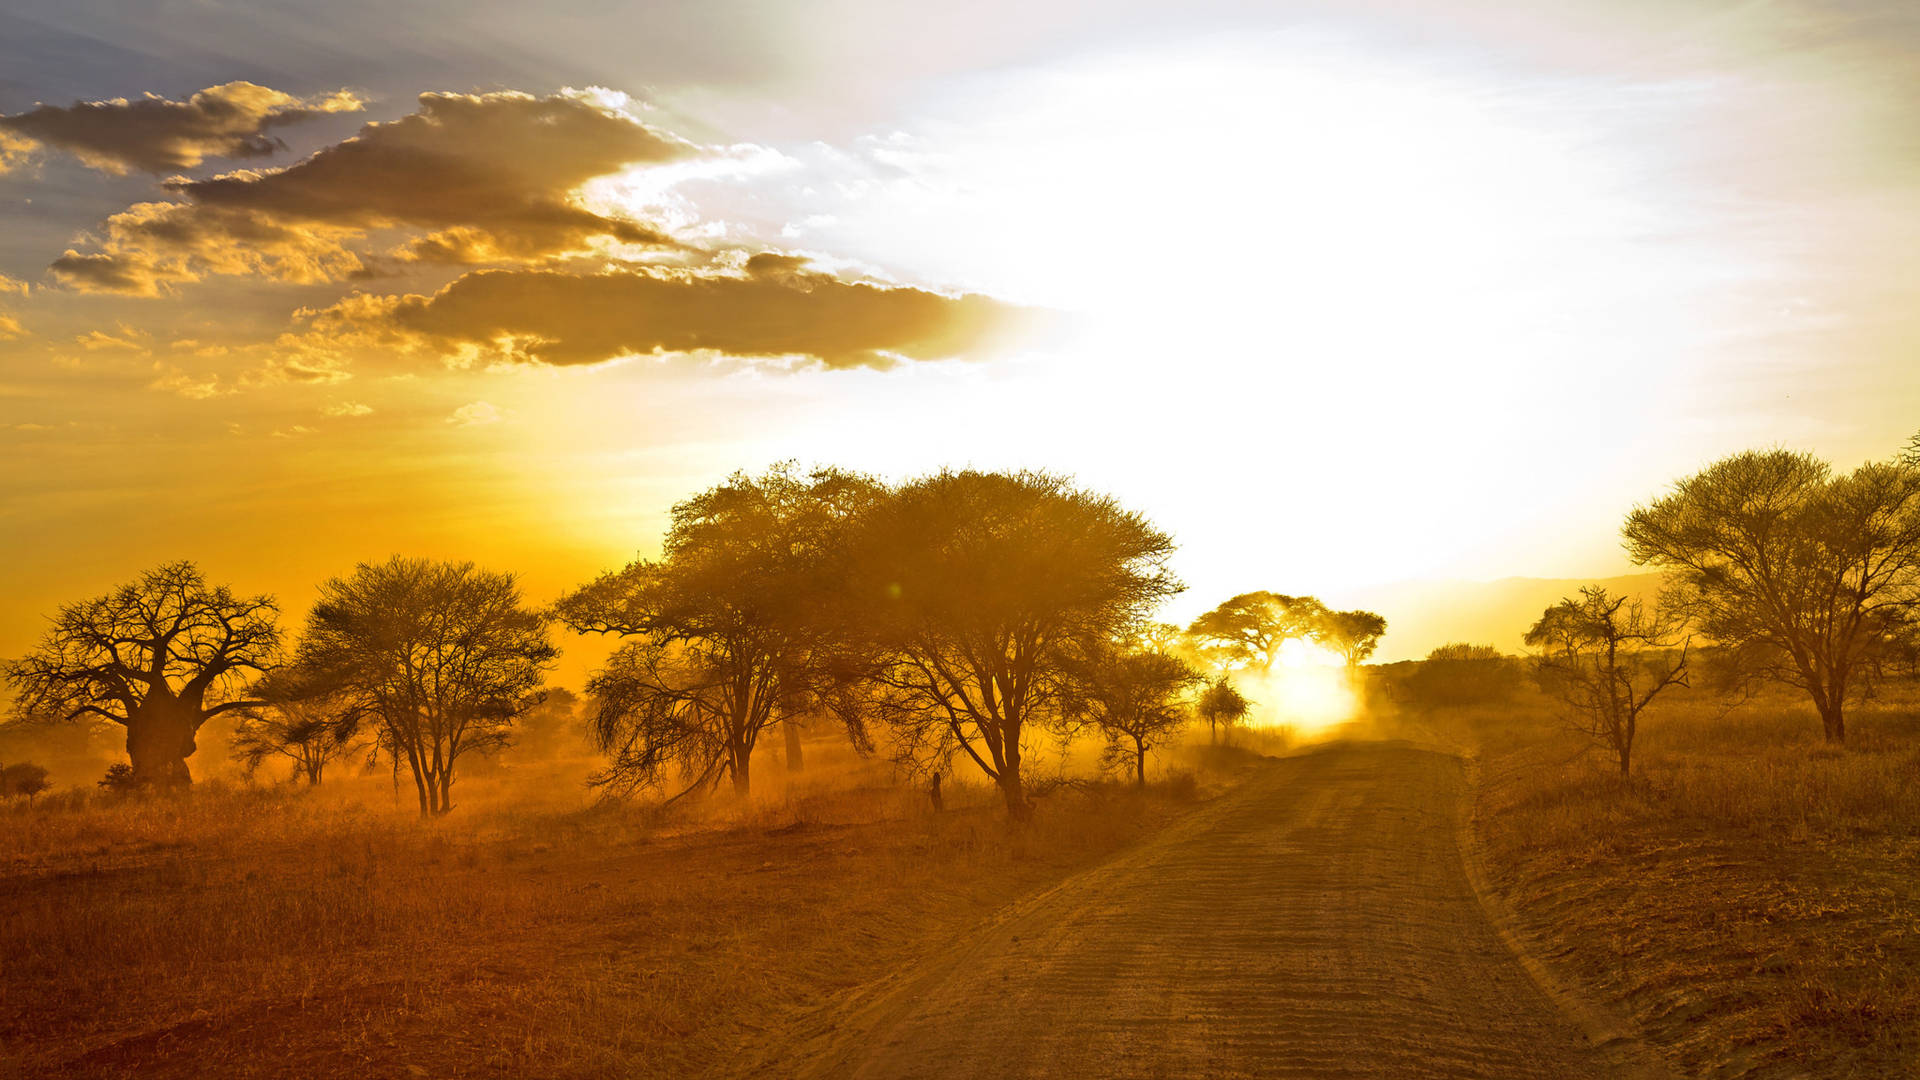 Desert Road In Africa 4k Picture